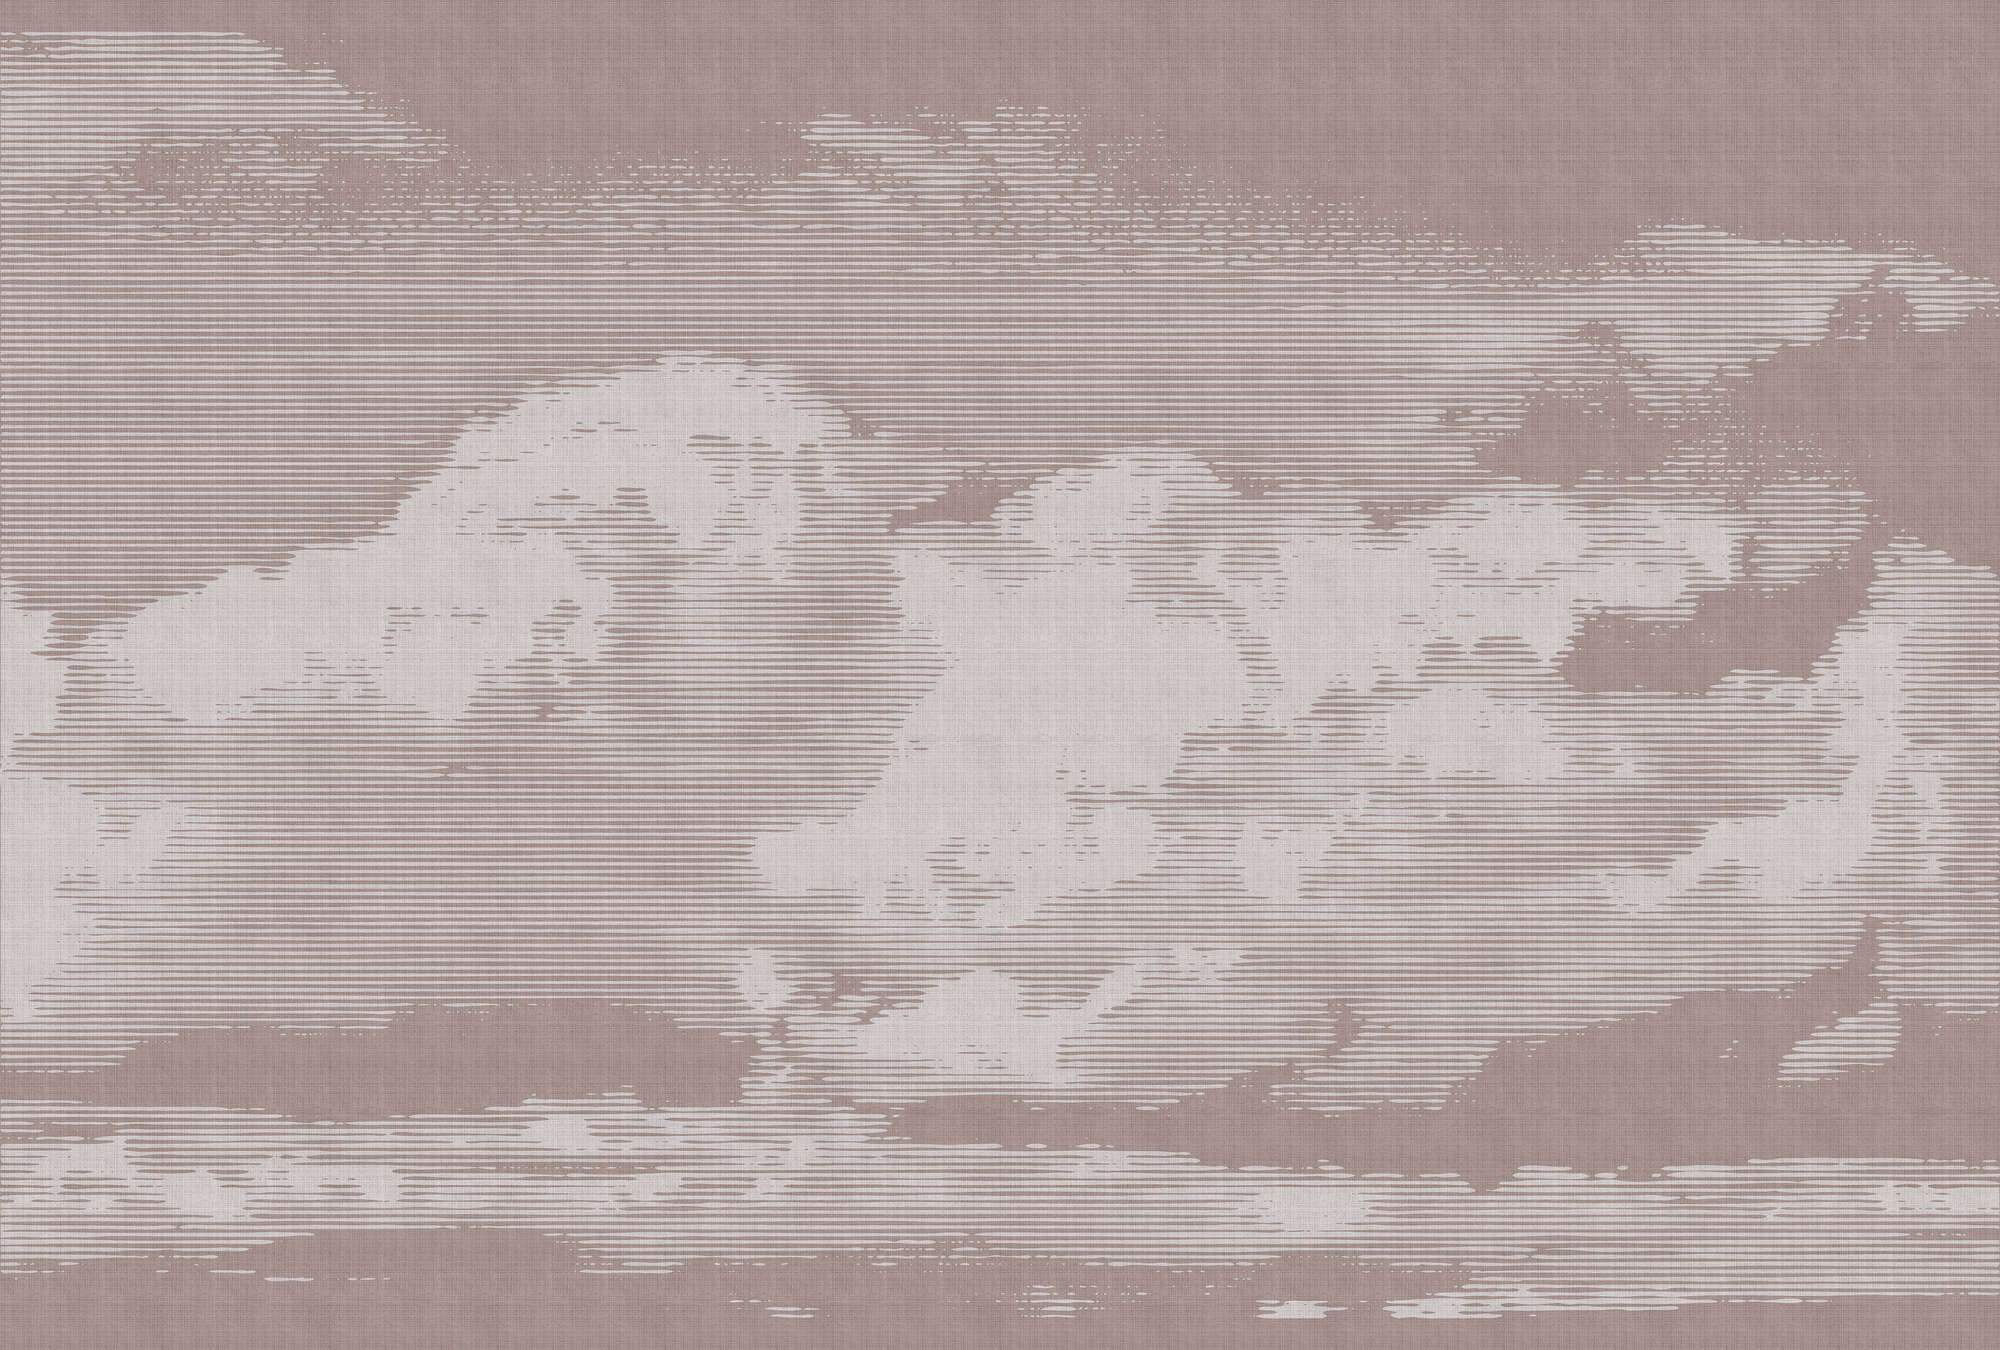             Nubes 3 - Papel pintado con motivo de nubes - Estructura de lino natural - Gris, Rosa | Vellón liso de primera calidad
        